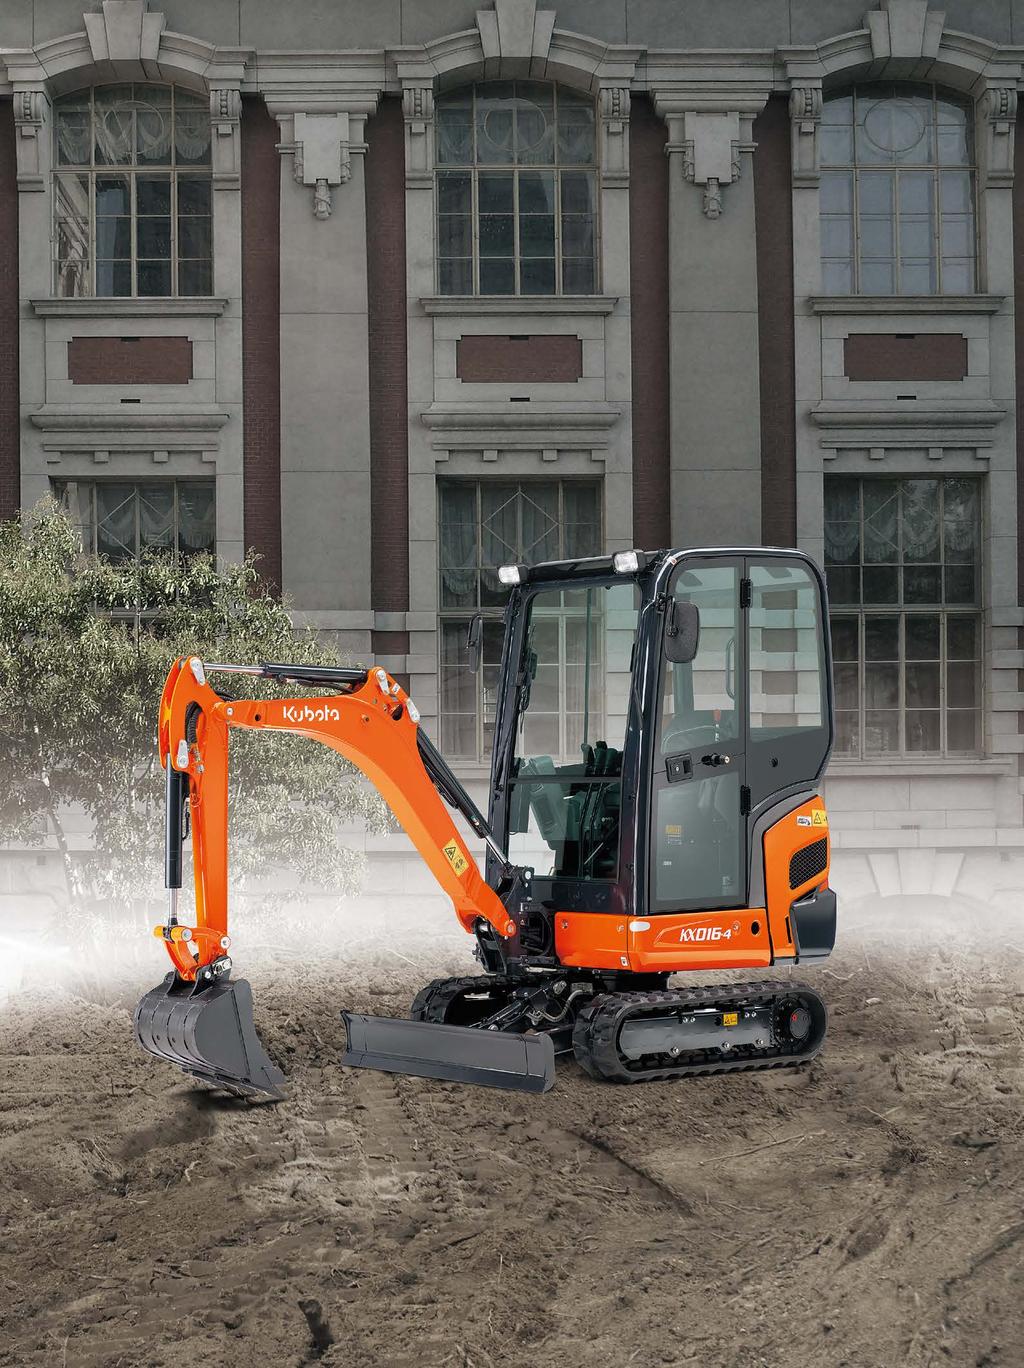 SUPERIOR PERFORMANCE Kubota s new KX016-4 mini excavator raises the standard in the 1.5-2.